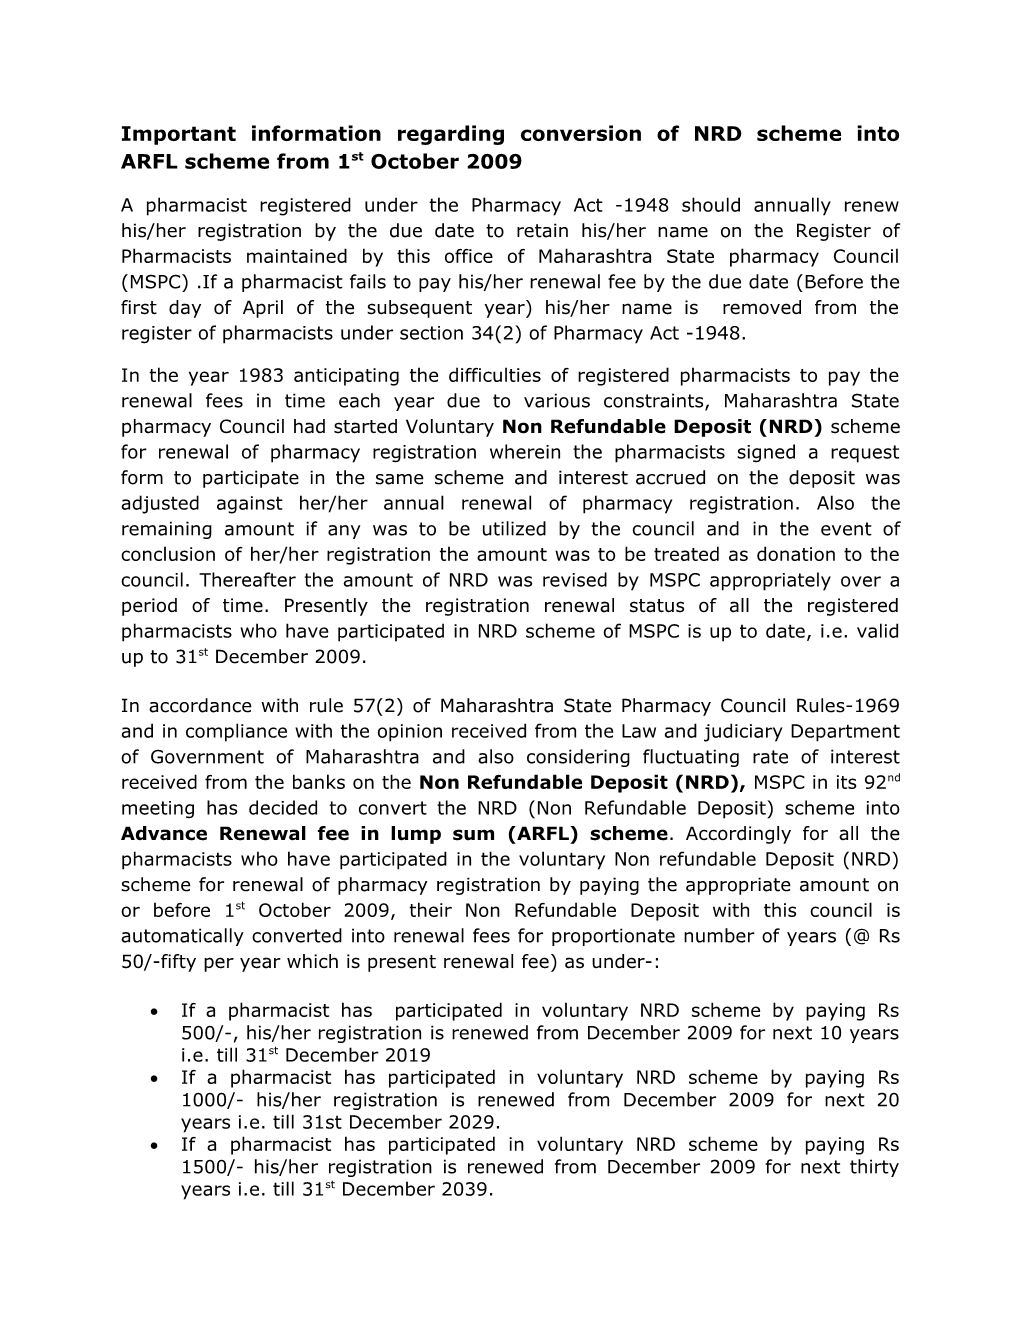 Important Information Regarding Conversion of NRD Scheme Into ARFL Scheme from 1St October